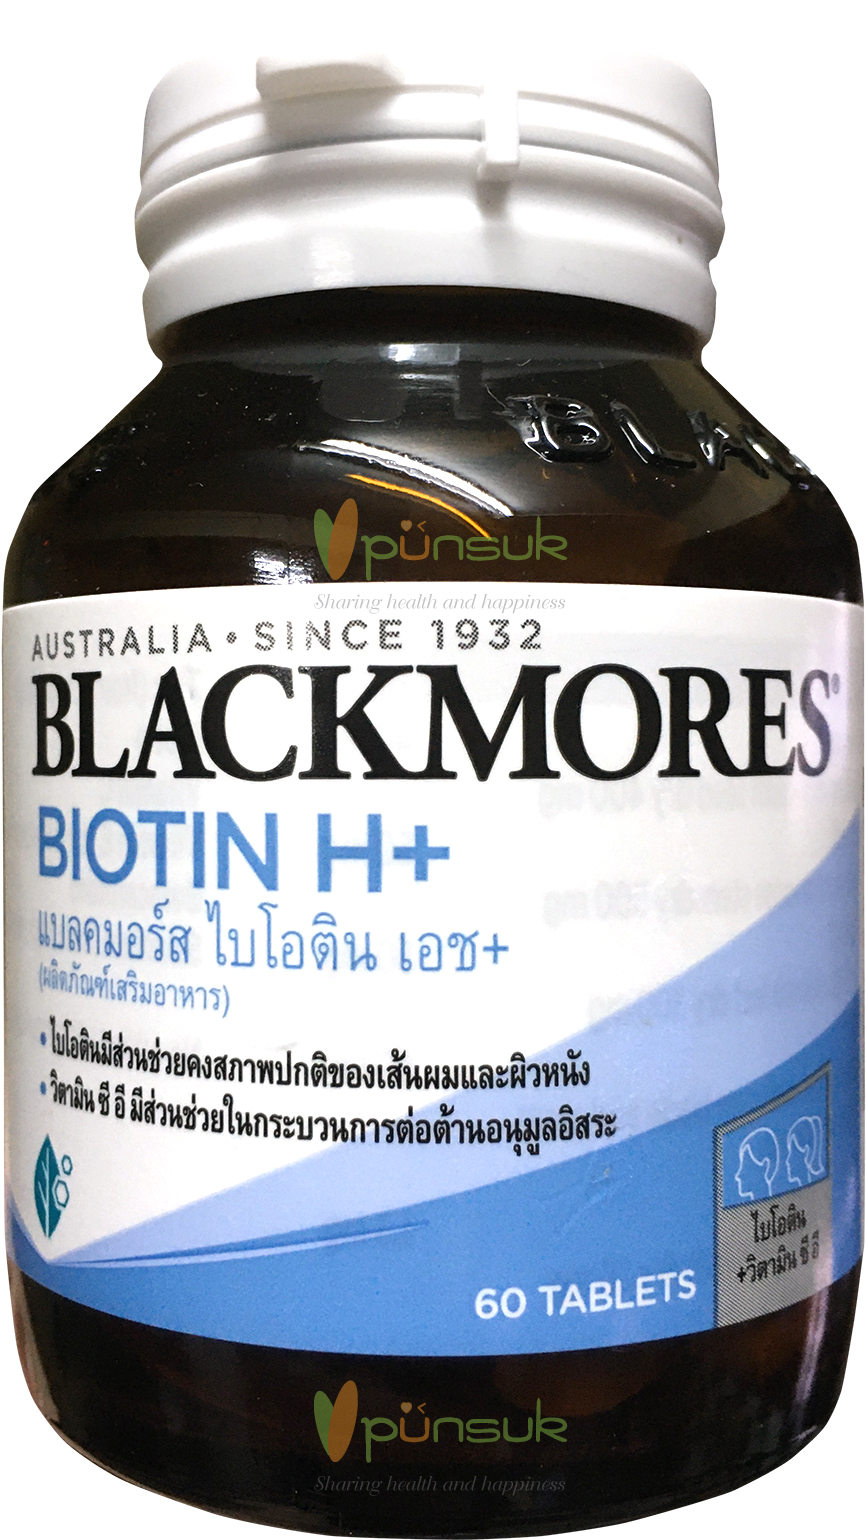 BLACKMORES BIOTIN H+ แบลคมอร์ส ไบโอติน เอช+